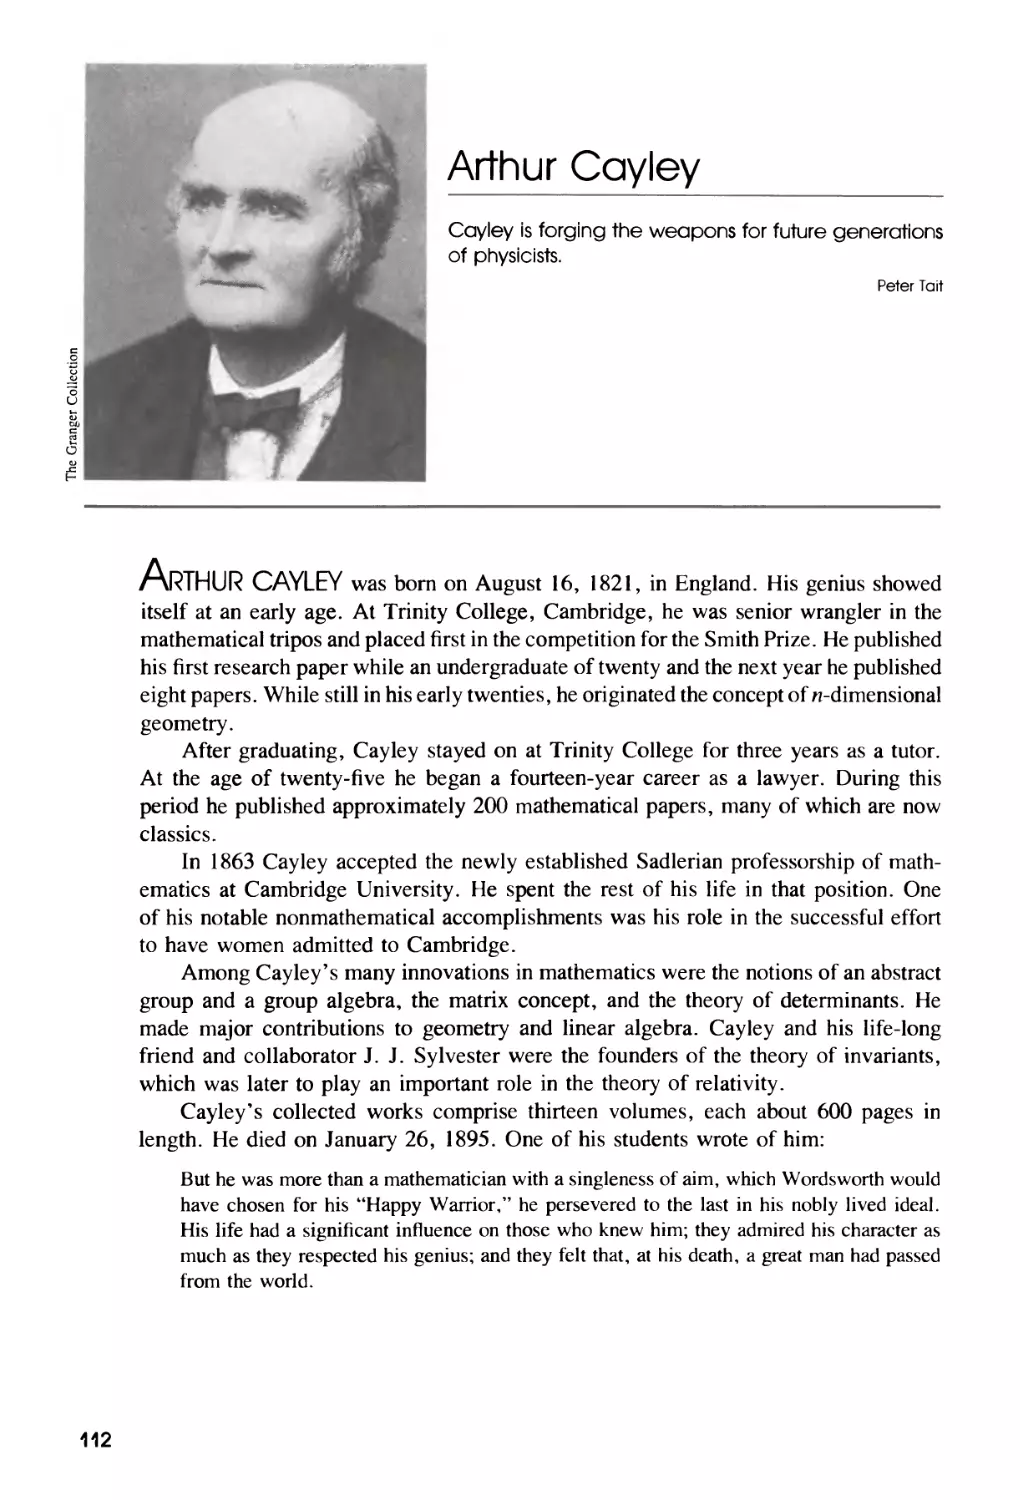 Biography of Arthur Cayley